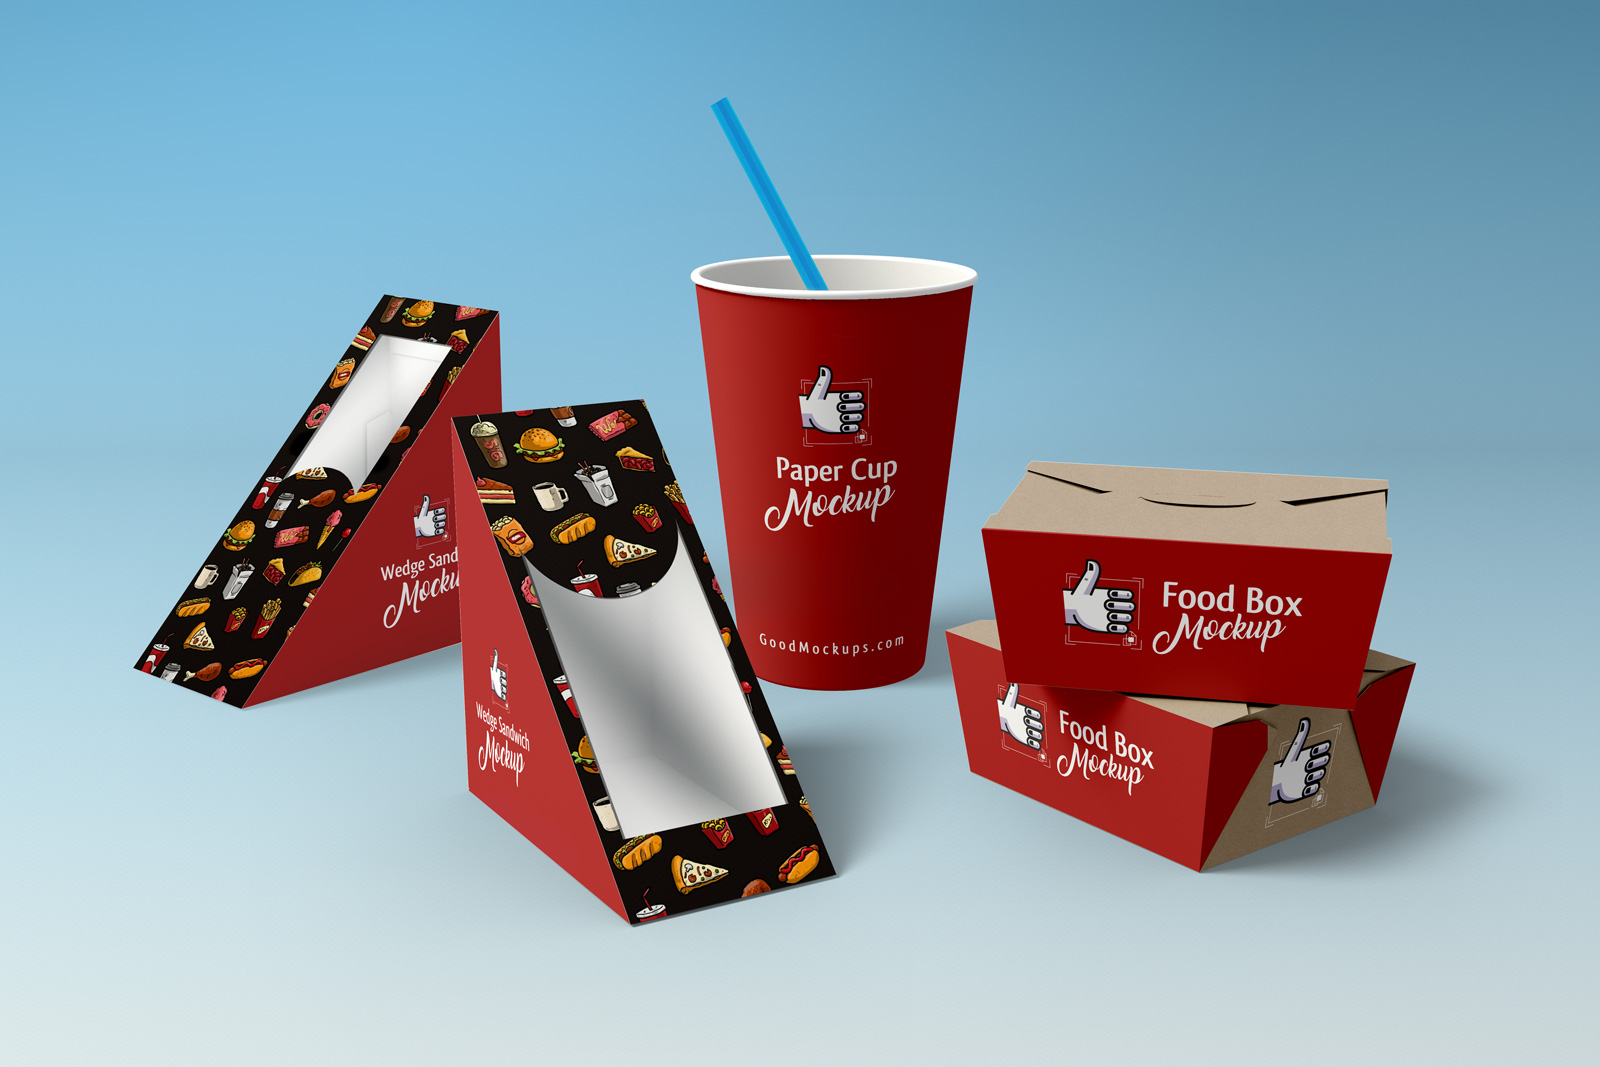 Free Sandwich, Food Box & Paper Cup Packaging Mockup PSD - Good Mockups